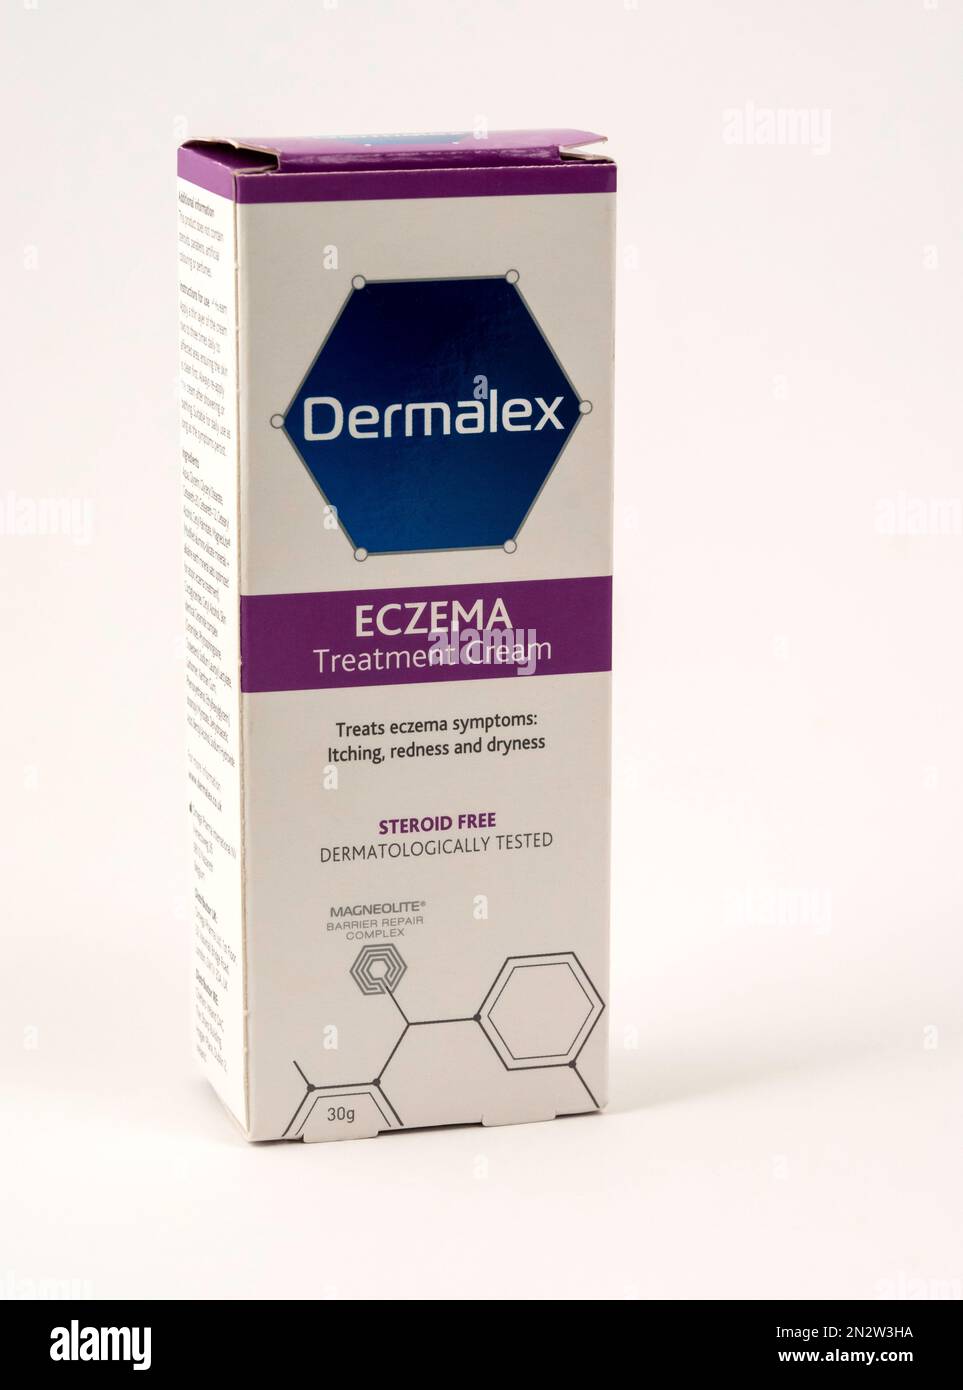 Dermalex Eczema Treatment Cream Stock Photo